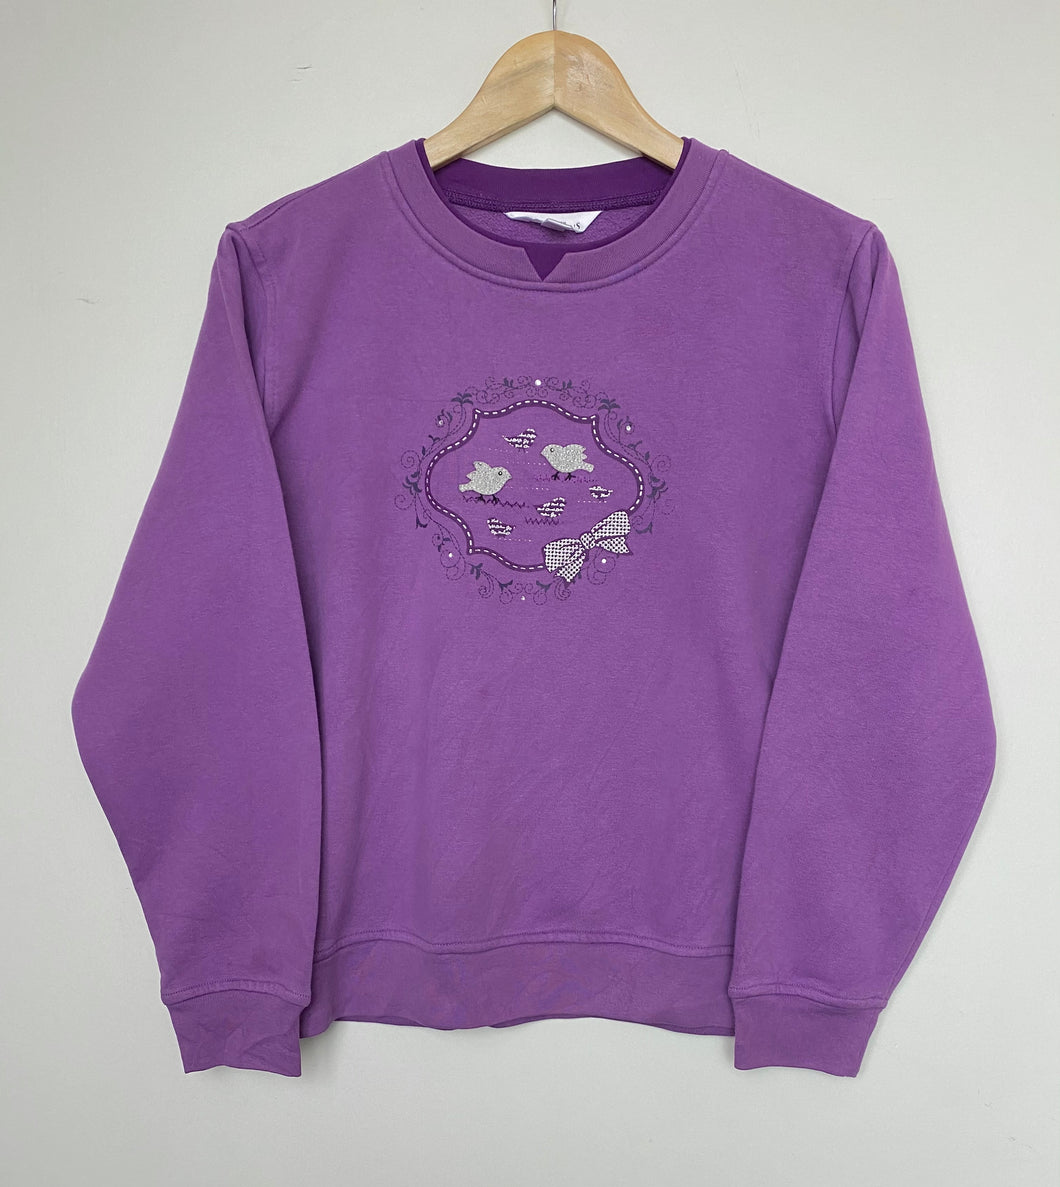 Embroidered ‘Birds’ sweatshirt (XS)